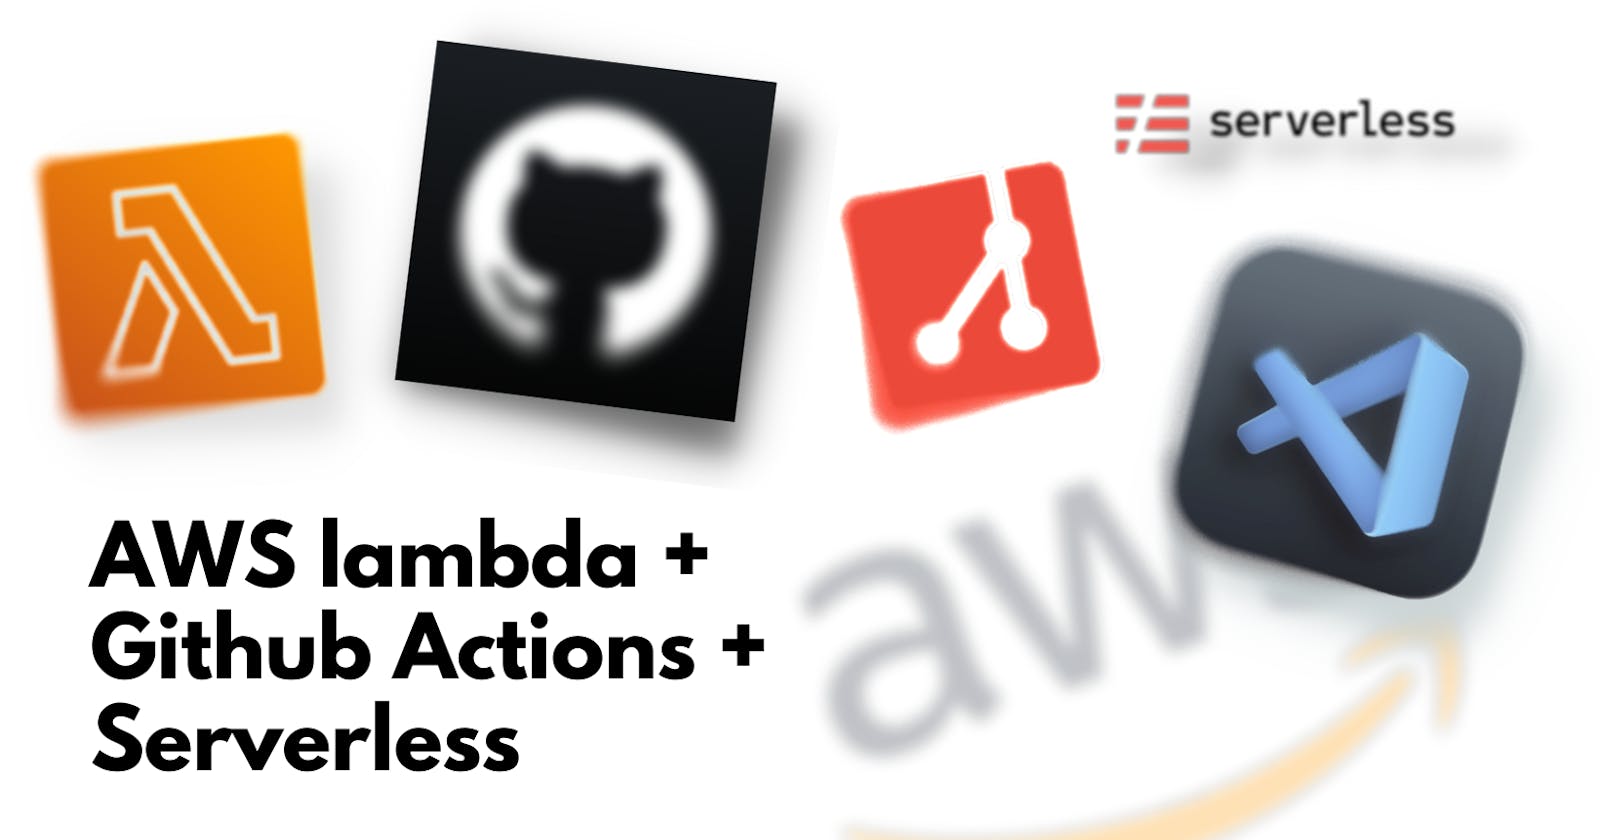 Deploying lambda serverless functions to AWS Cloud + Github Actions. 🚀